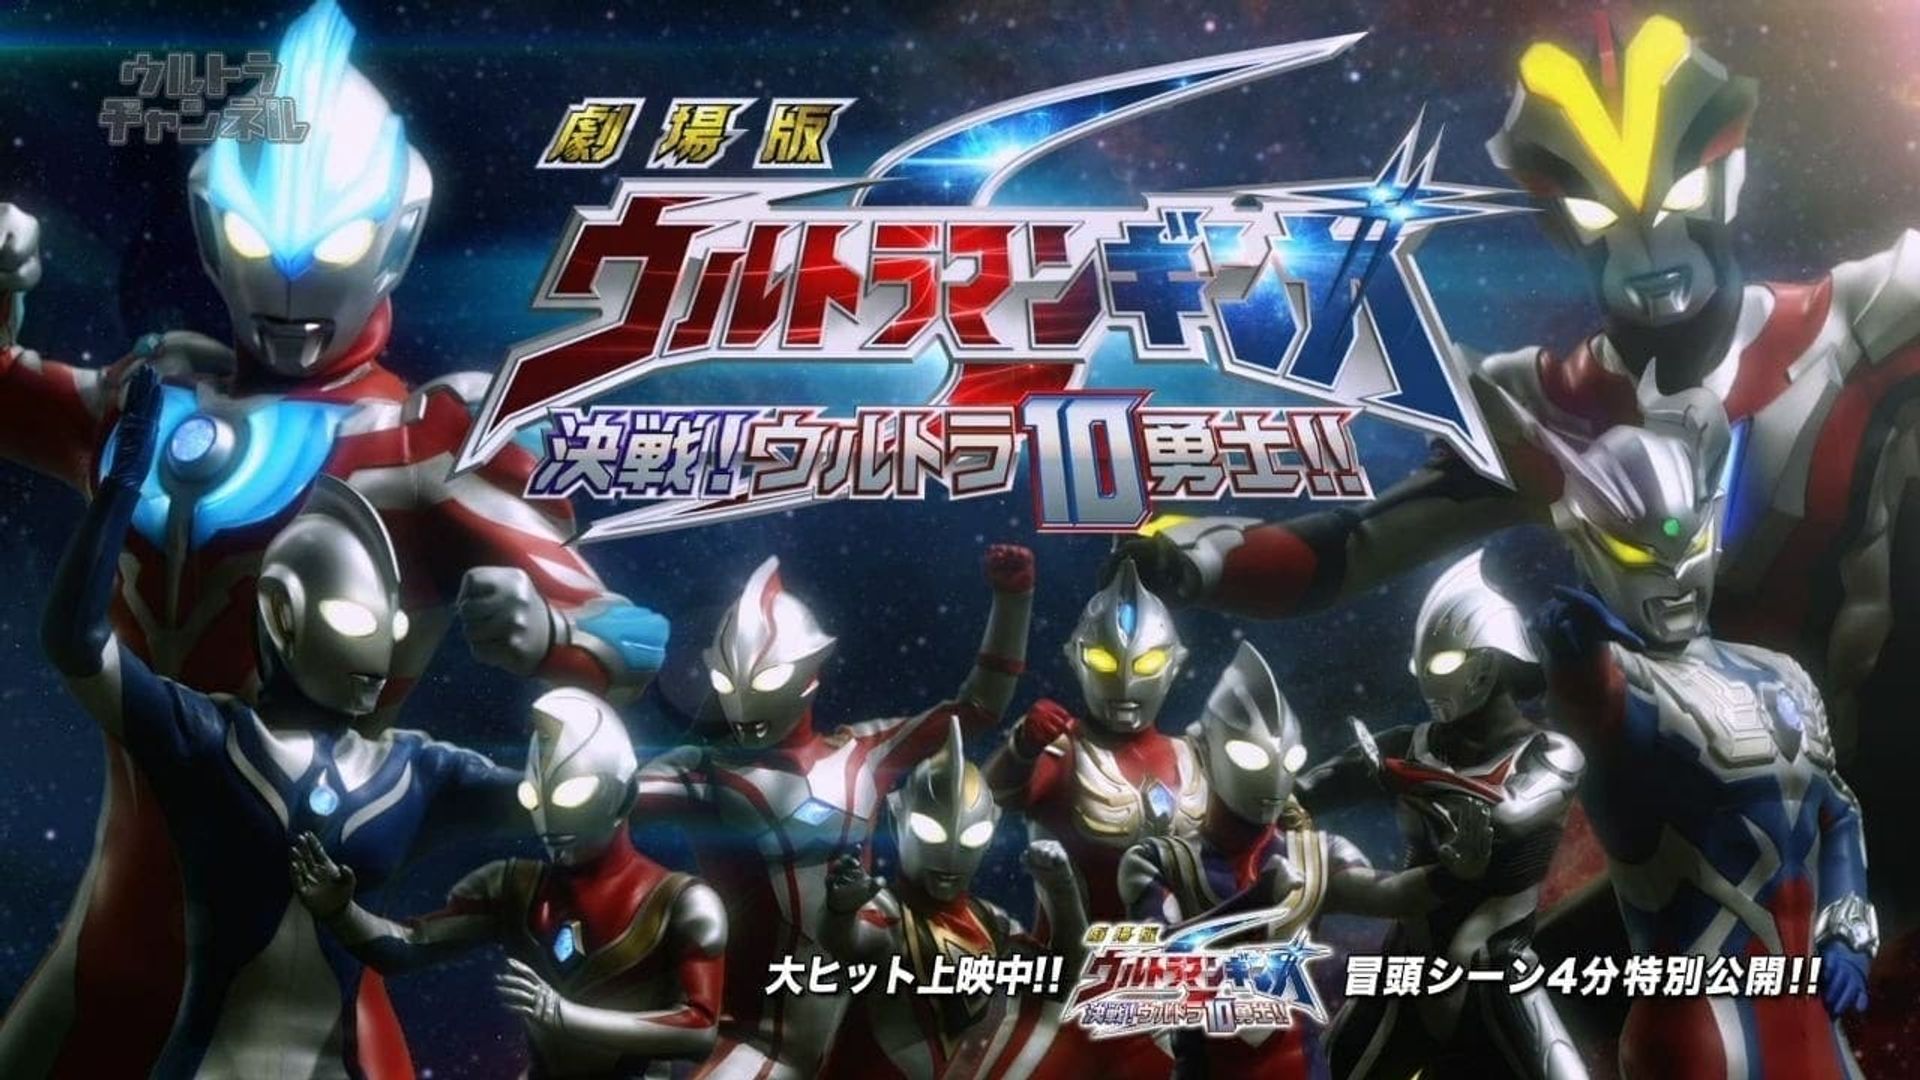 Ultraman Ginga S: Showdown! Ultra 10 Warriors!! background